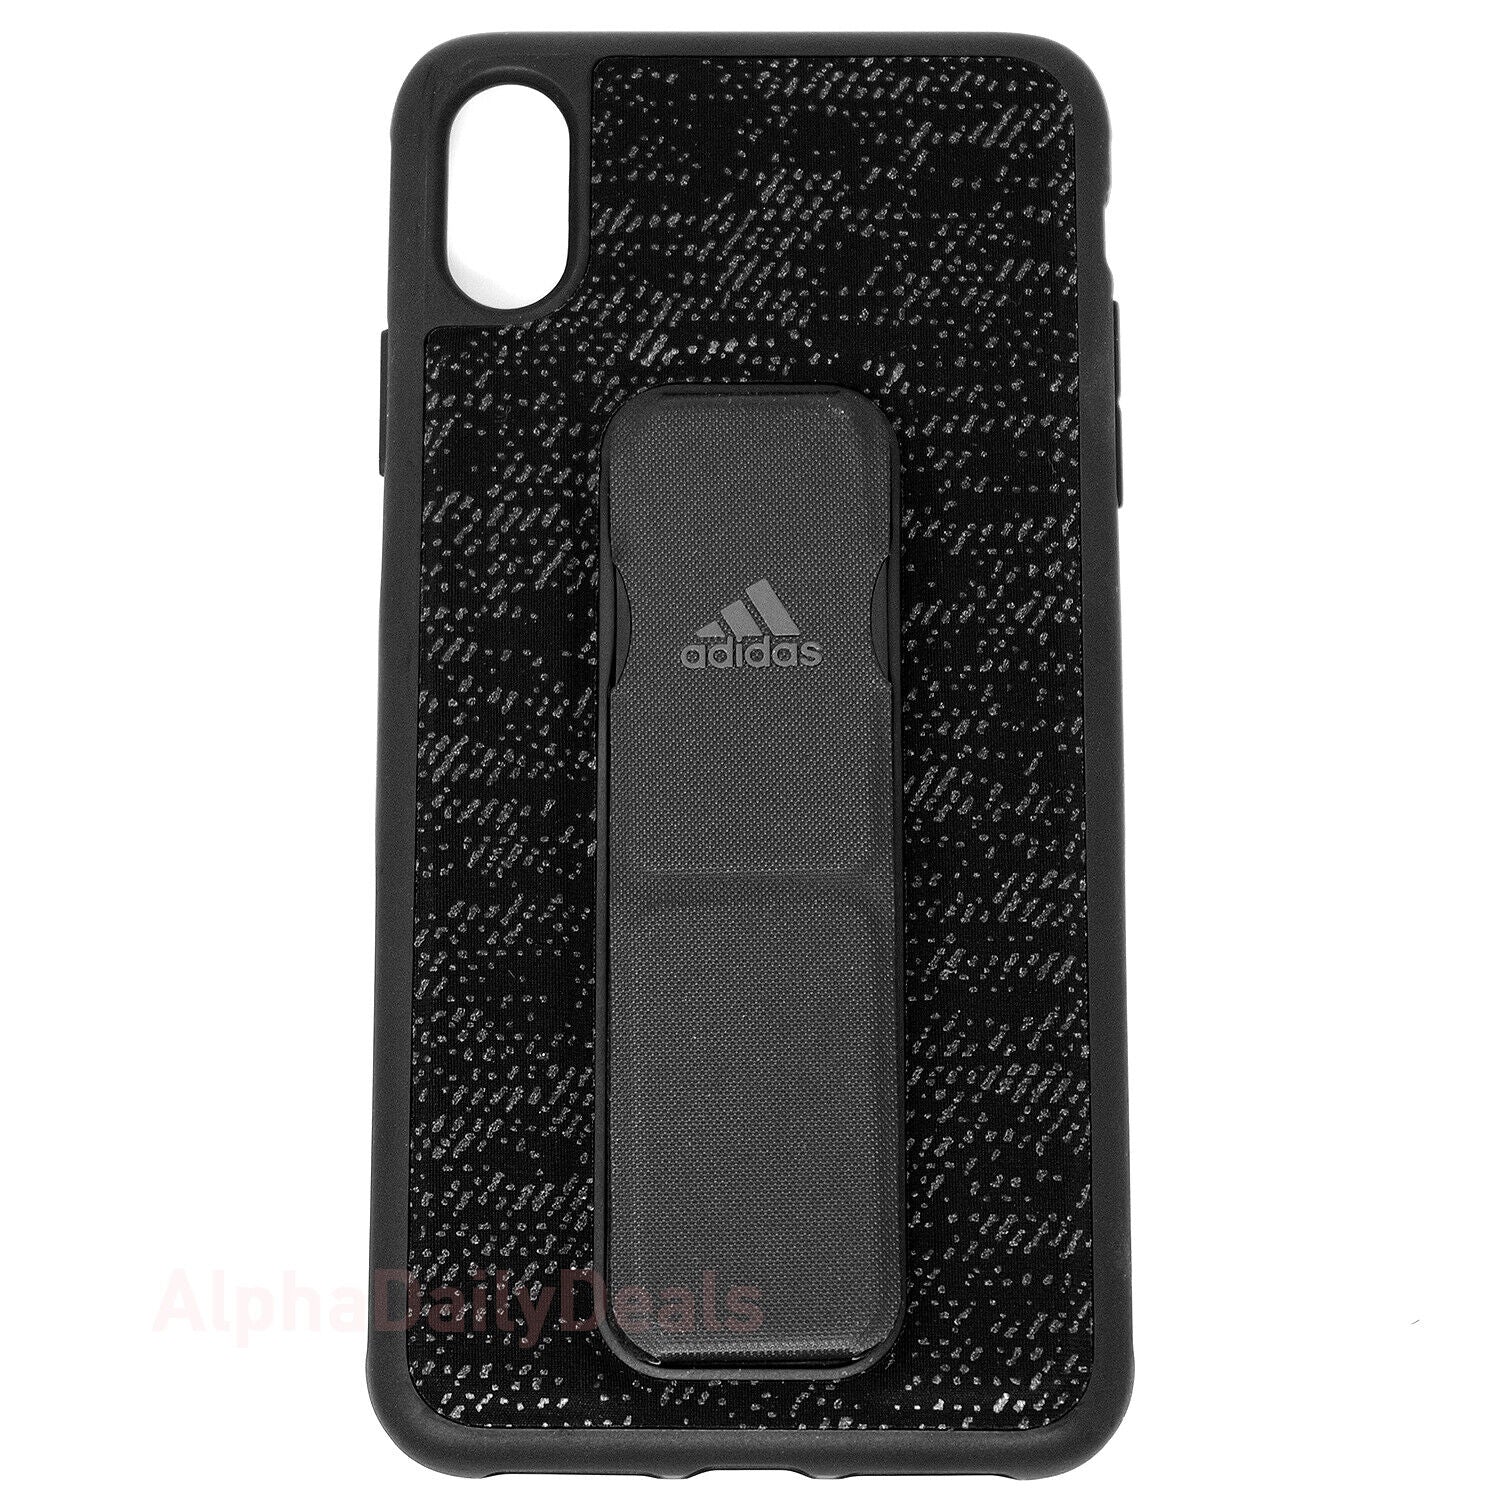 Adidas iPHONE XS MAX Protective Grip Case Black